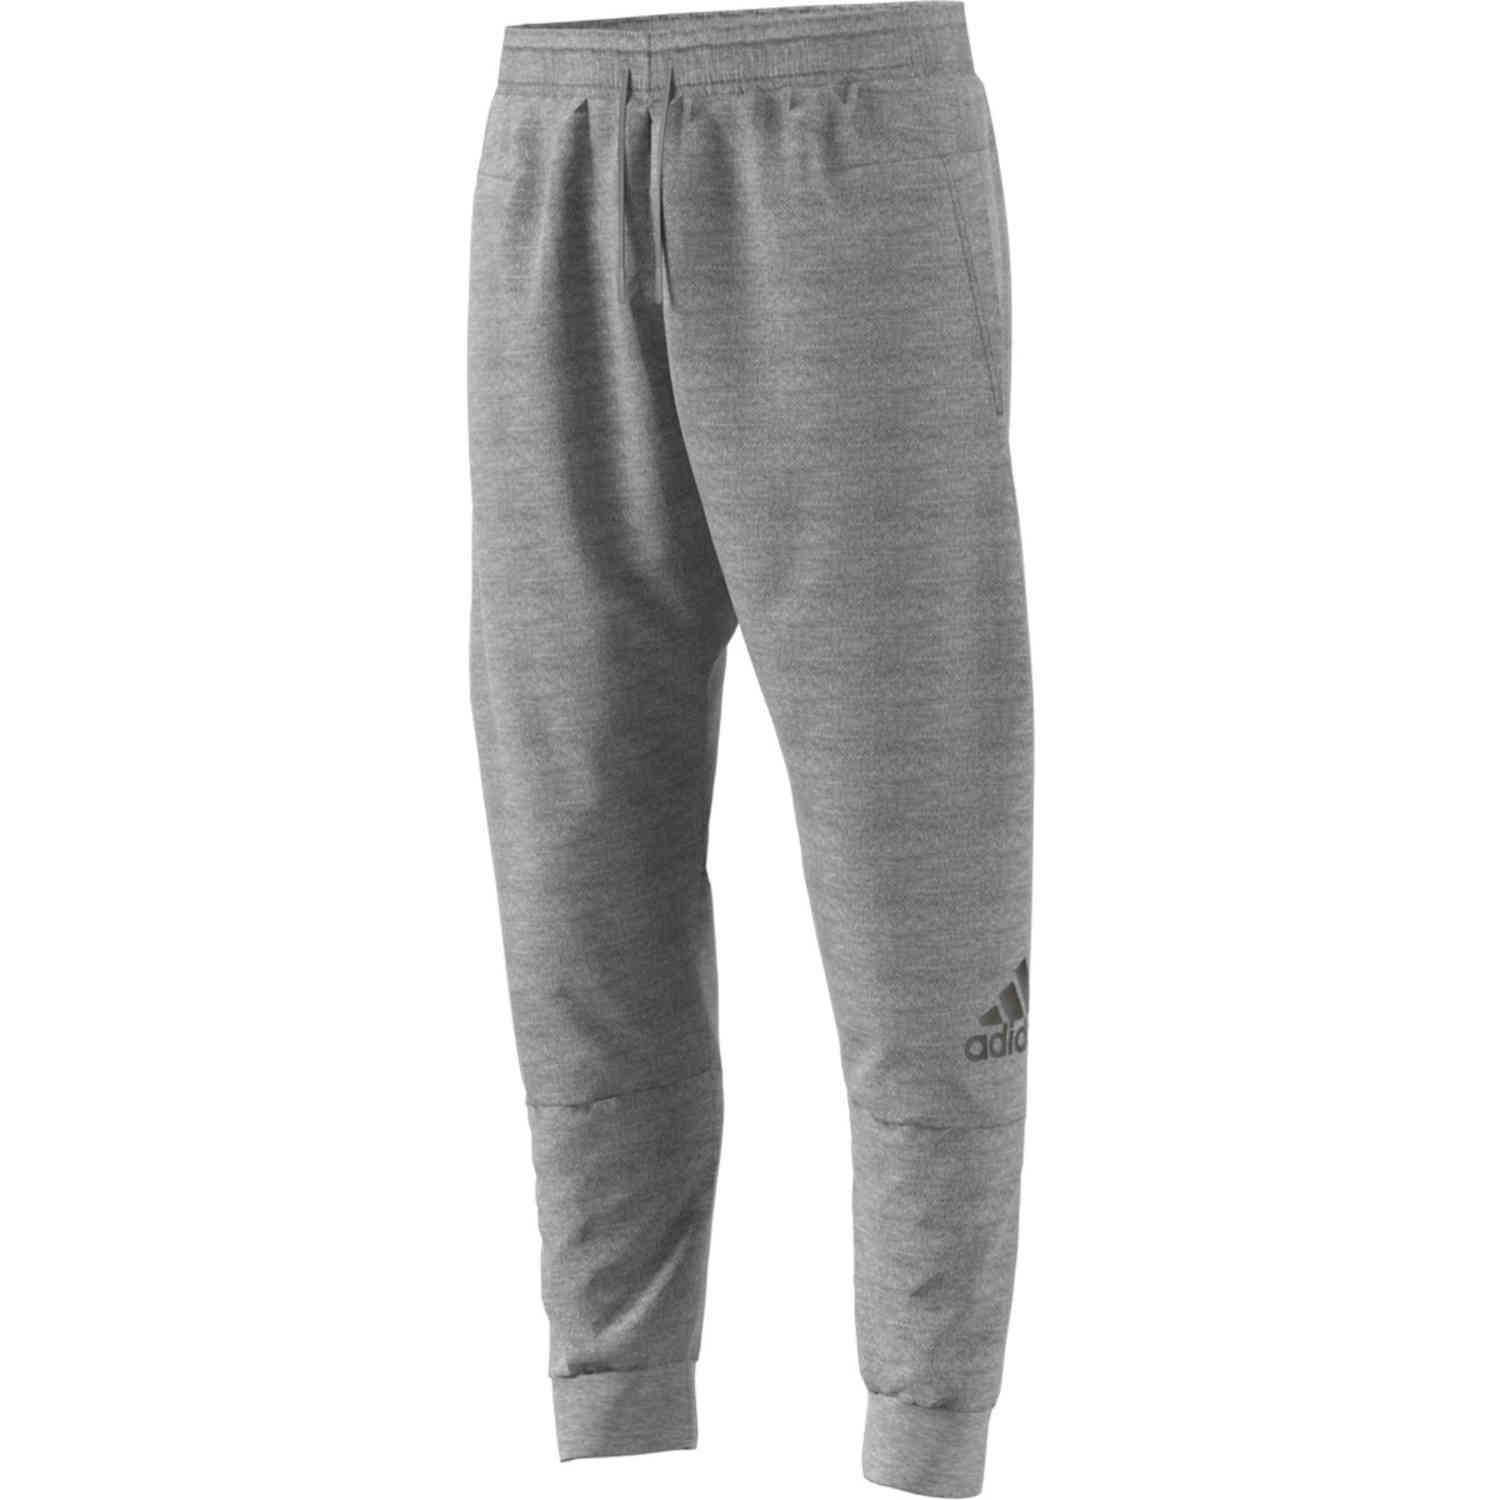 adidas SID Lifestyle Pants - Medium Grey Heather - SoccerPro